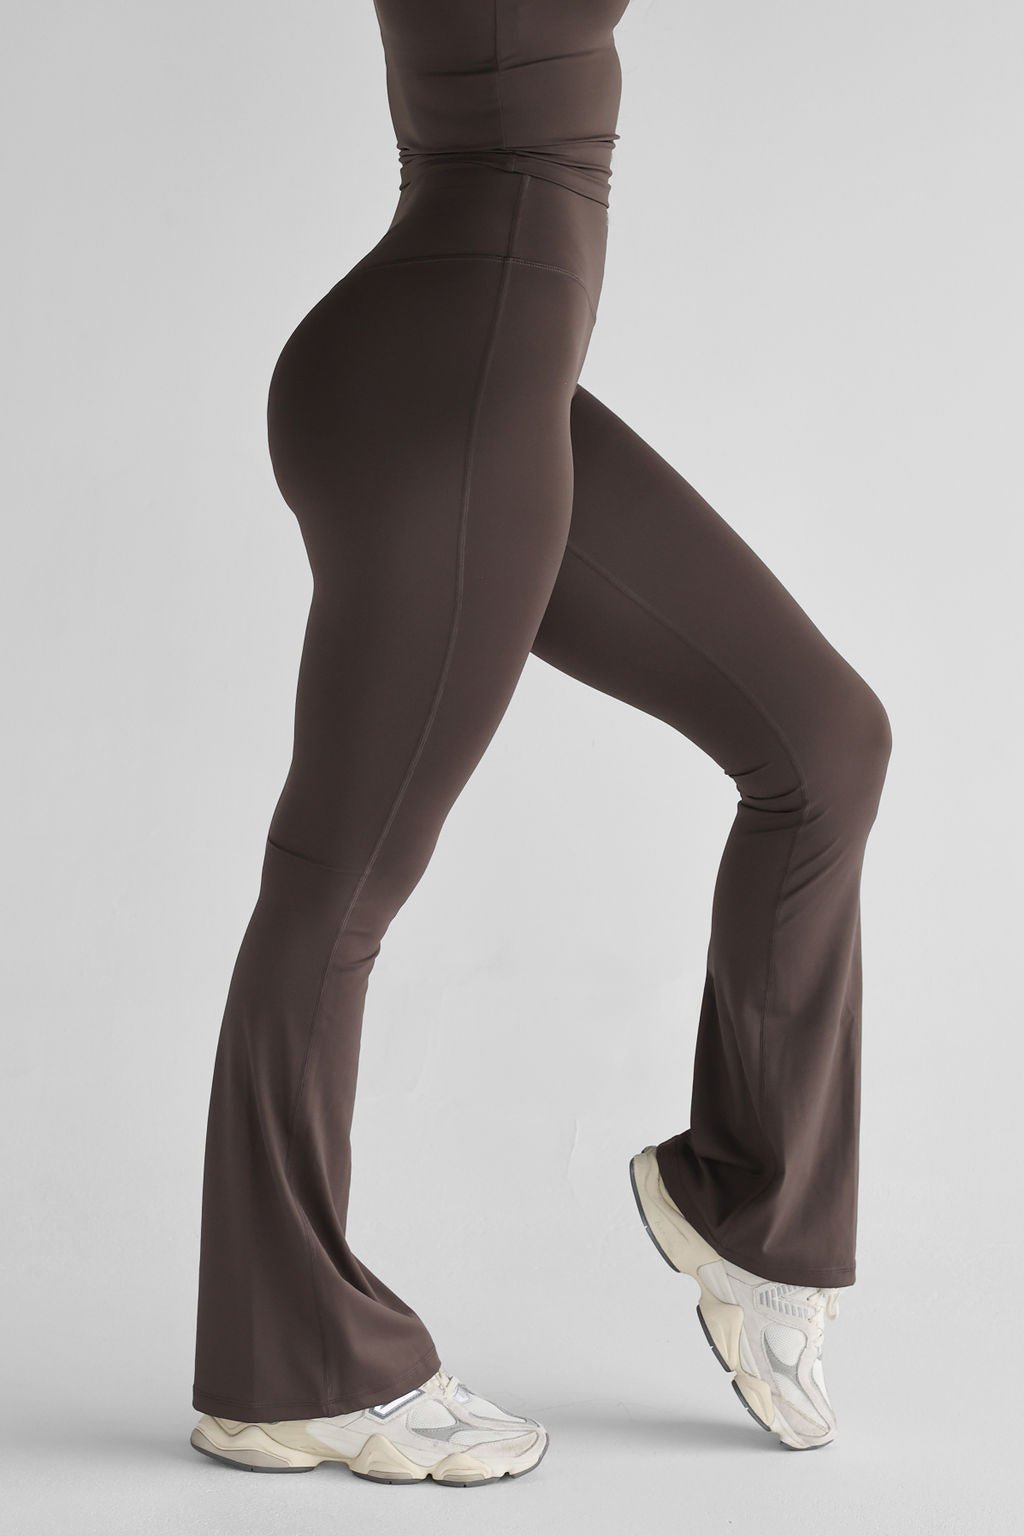  Avalanche Women's Flare Legging, Buttery Soft Squat